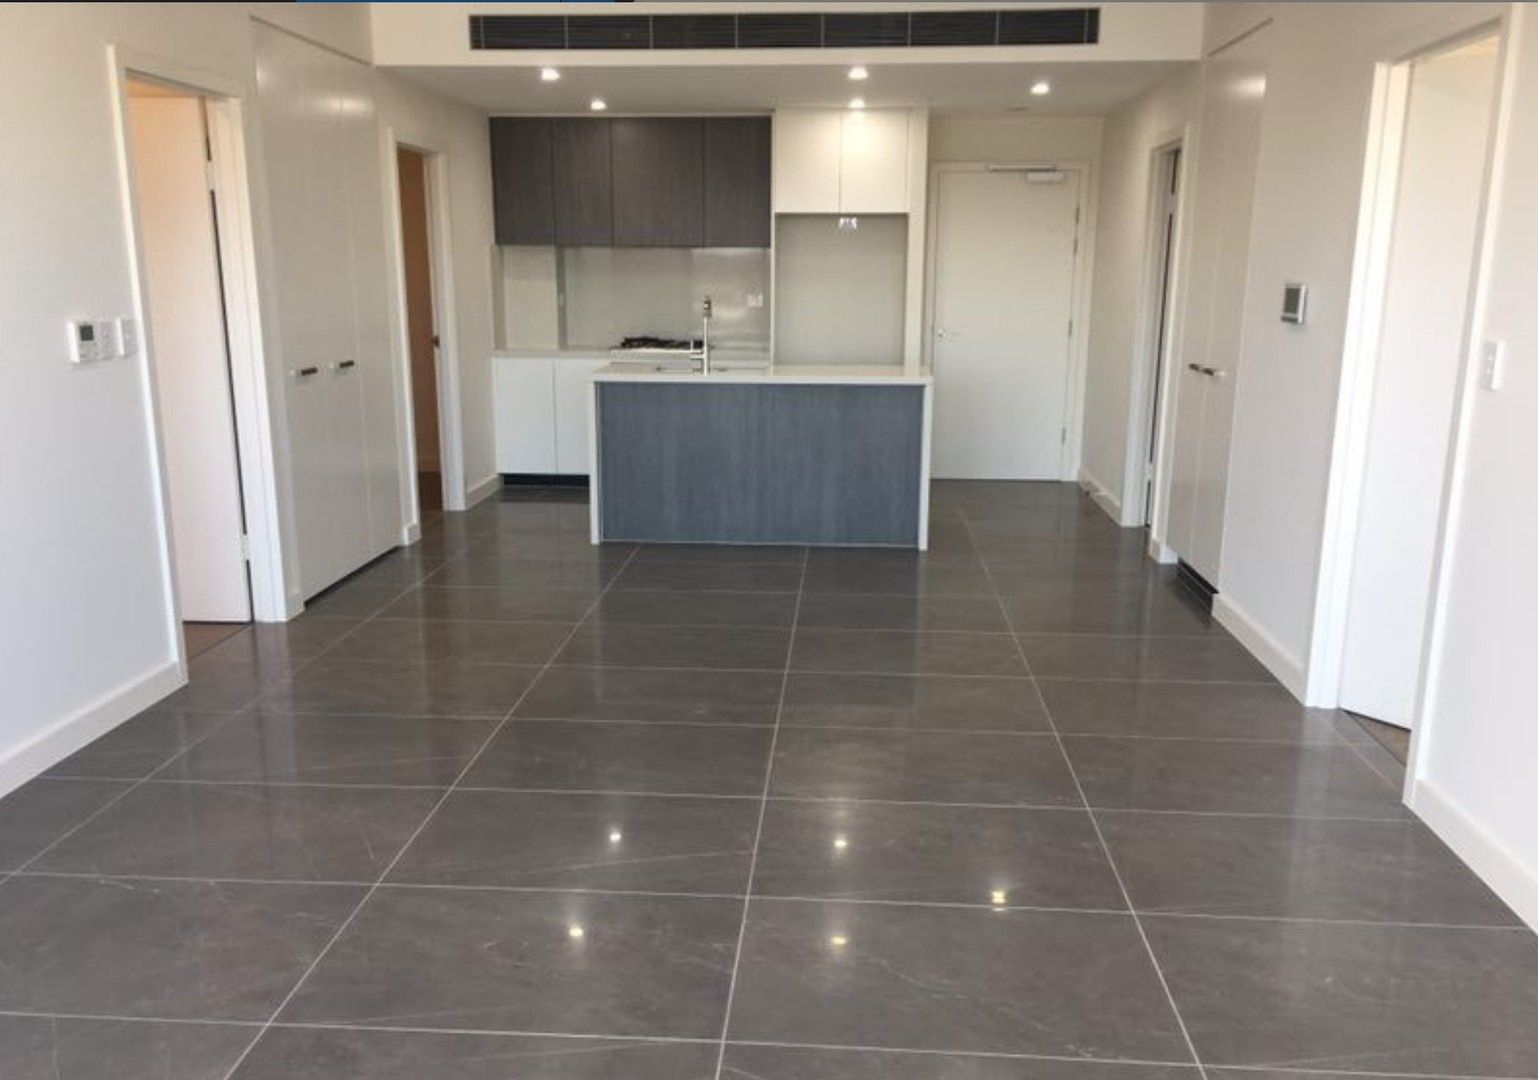 2 bedrooms Apartment / Unit / Flat in Level 1/9 Paddock Street LIDCOMBE NSW, 2141